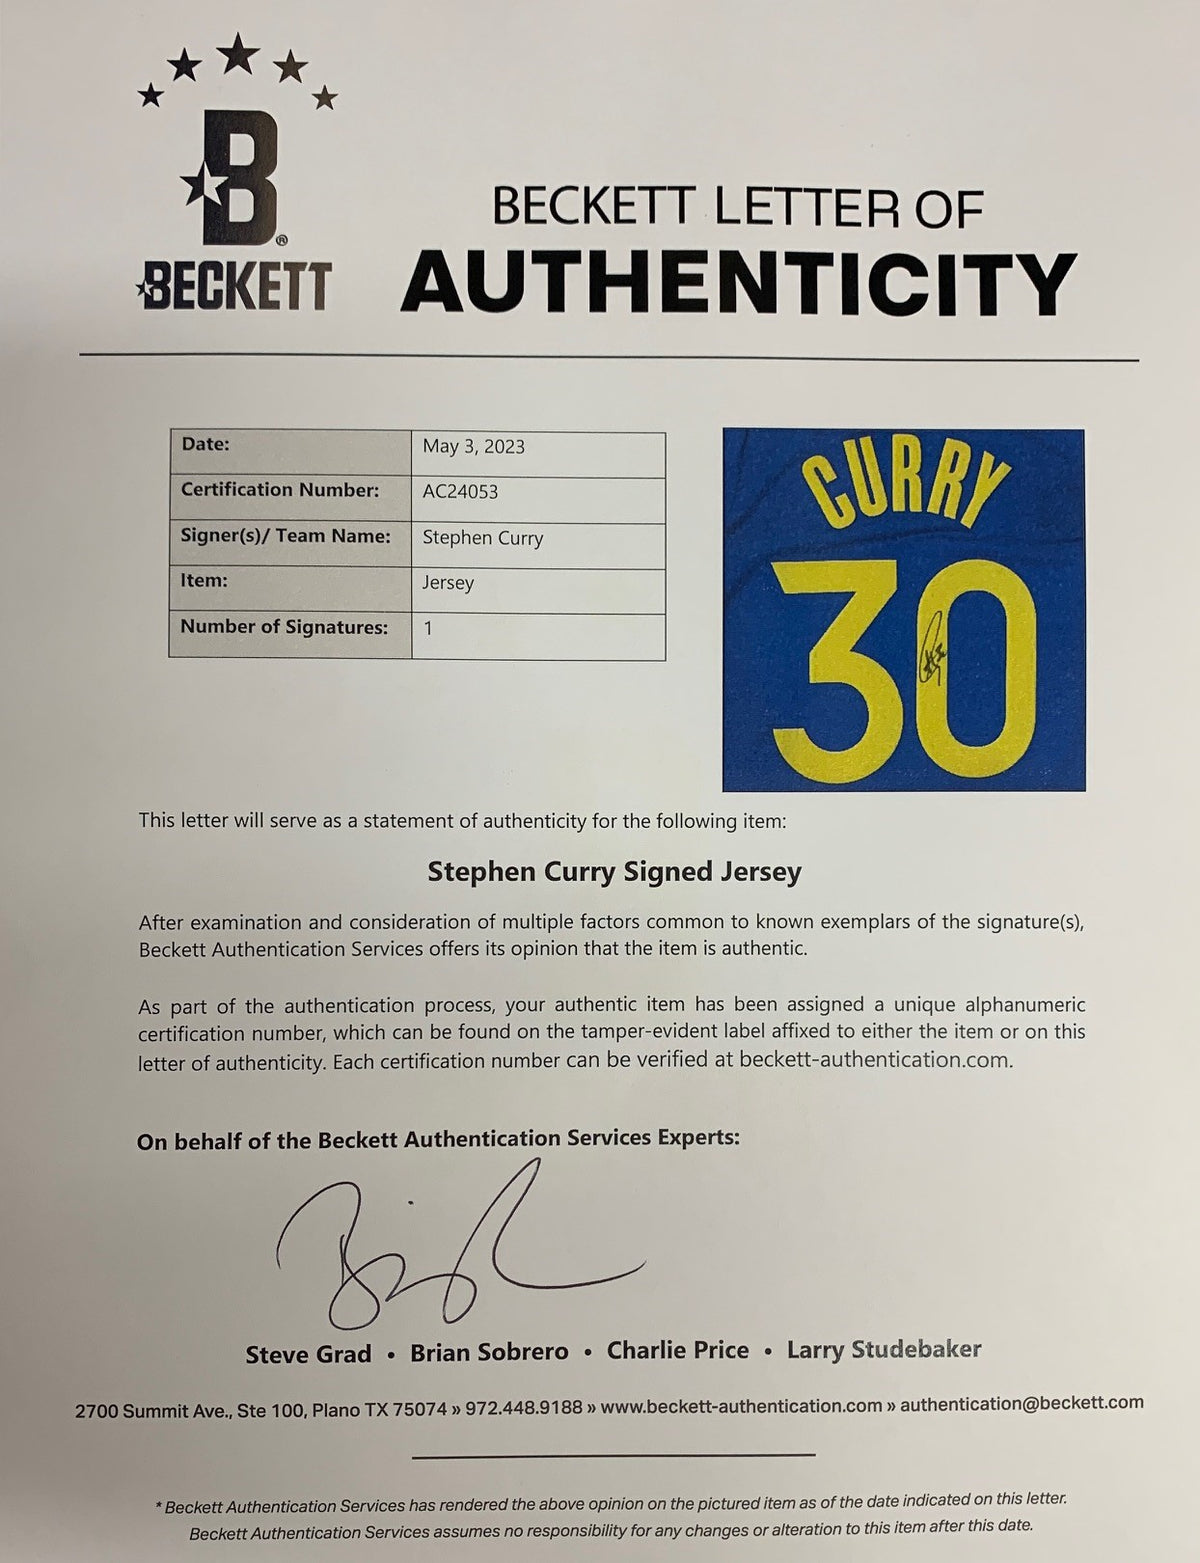 Stephen Curry Signed Autographed Warriors Year Zero Swingman Nike Jersey  USA SM - USA Sports Marketing